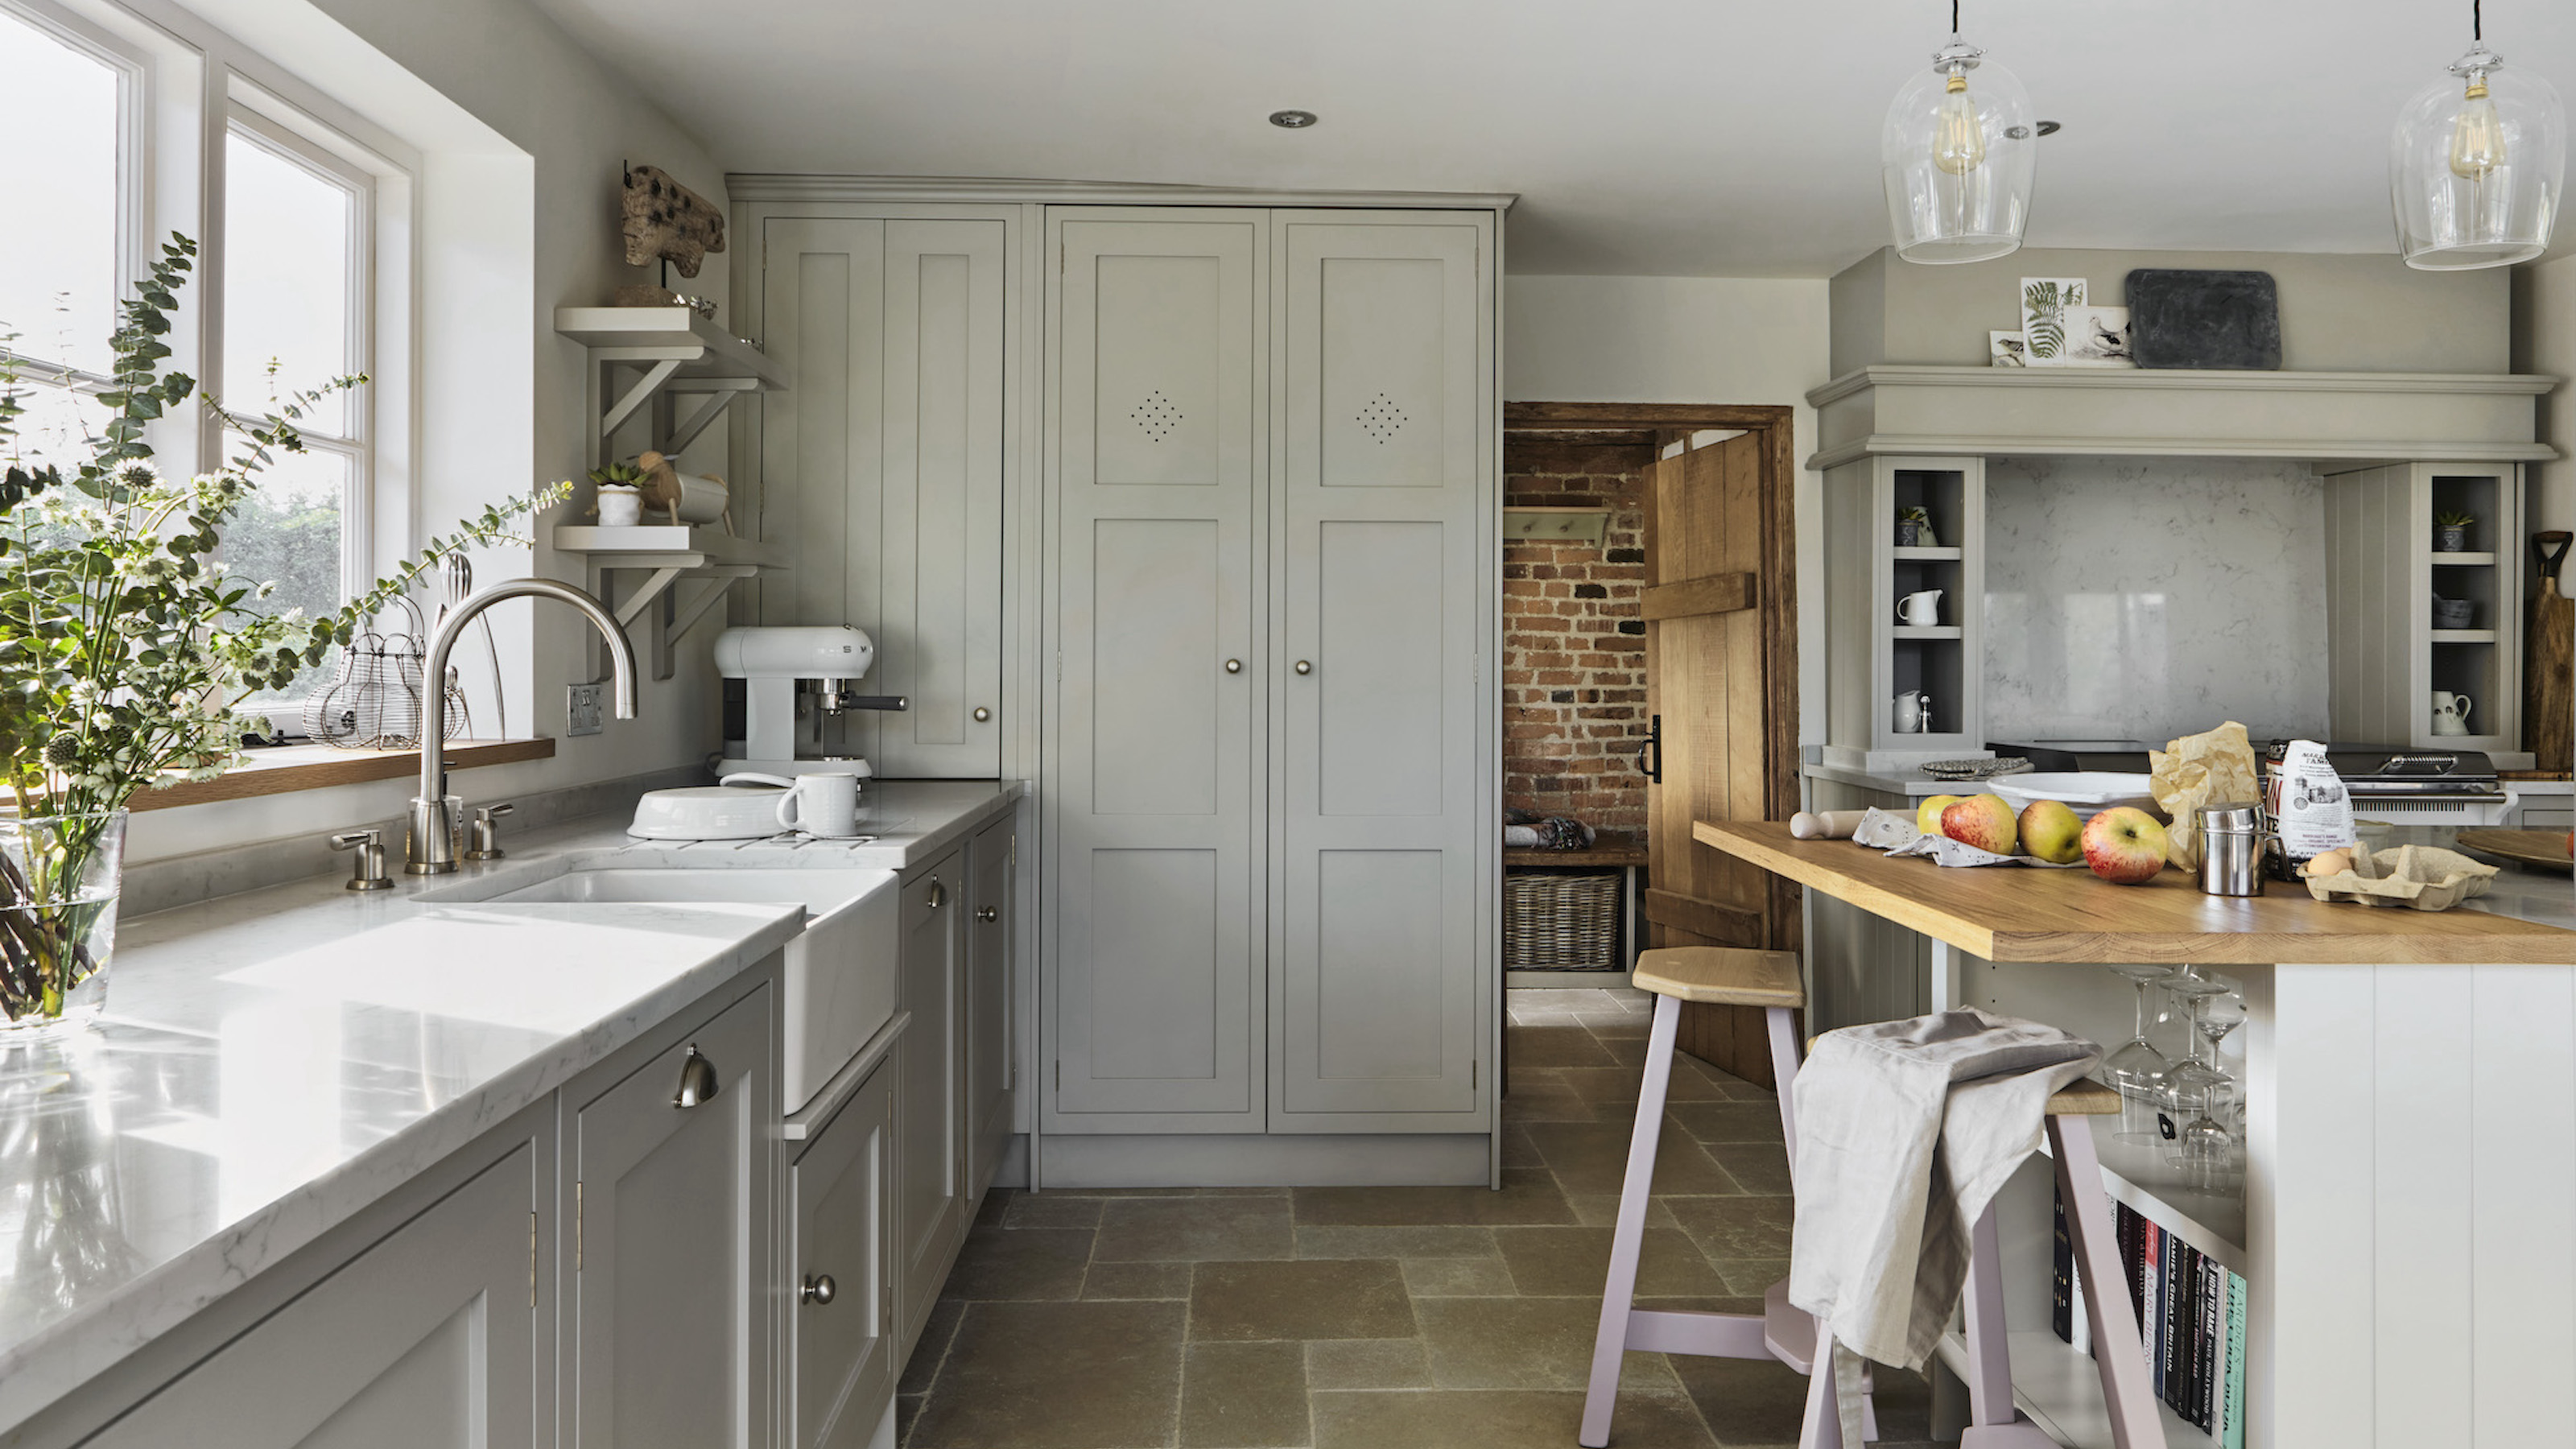 Cottage kitchen ideas 20 pretty ways to decorate homey spaces  